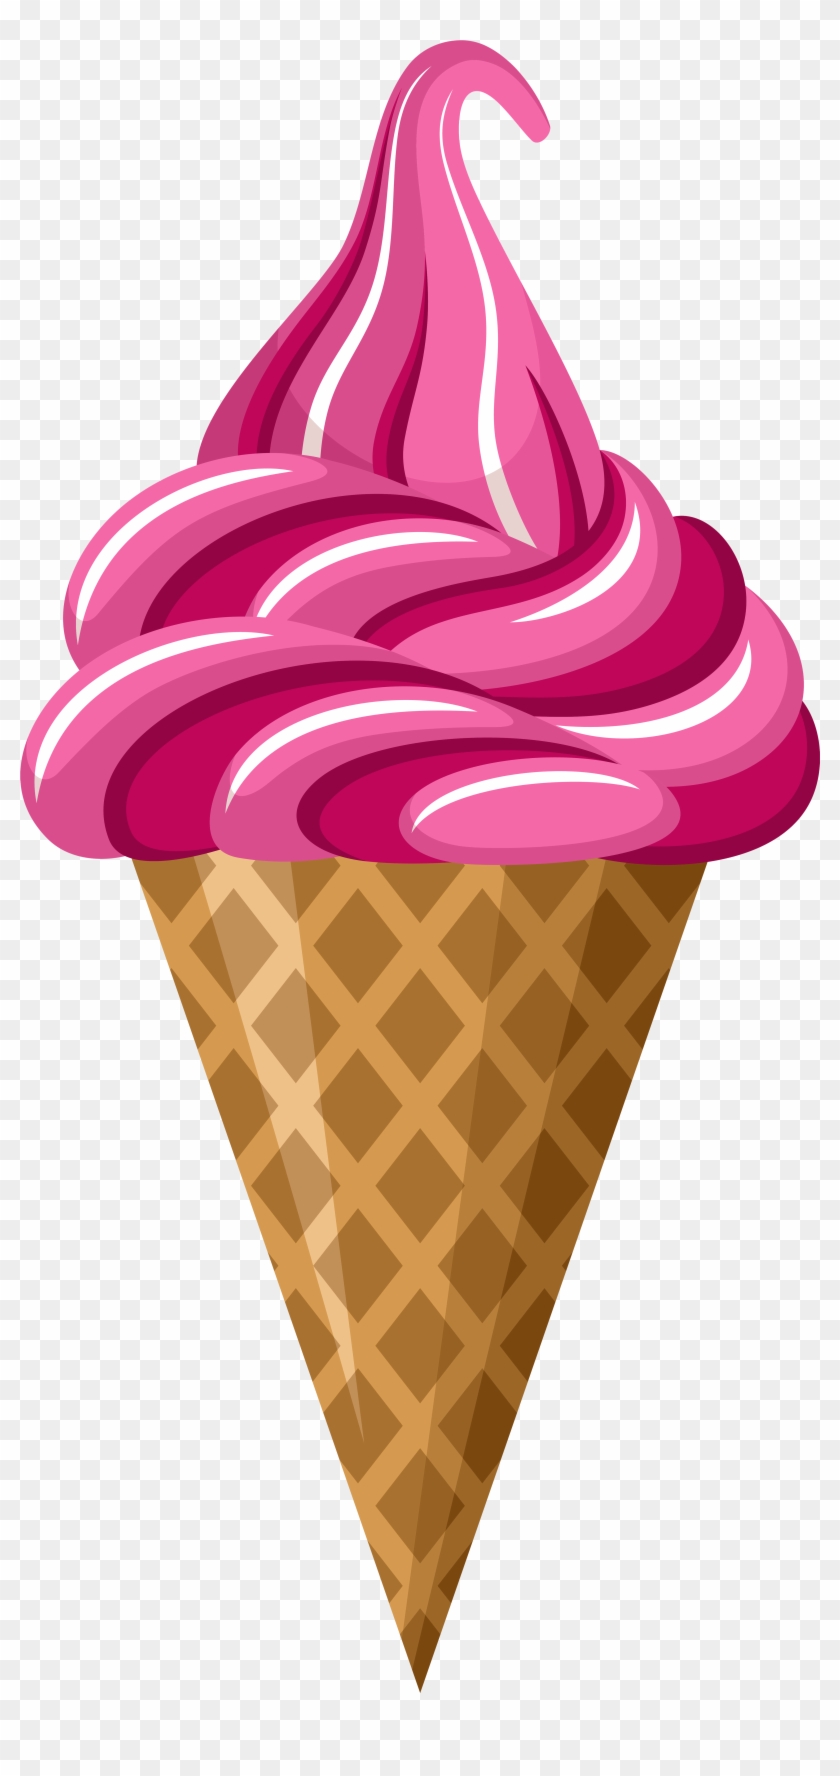 Ice Cream Clipart Images Pink Ice Cream Cone Png Clip - Strawberry Ice Cream Cone #556564